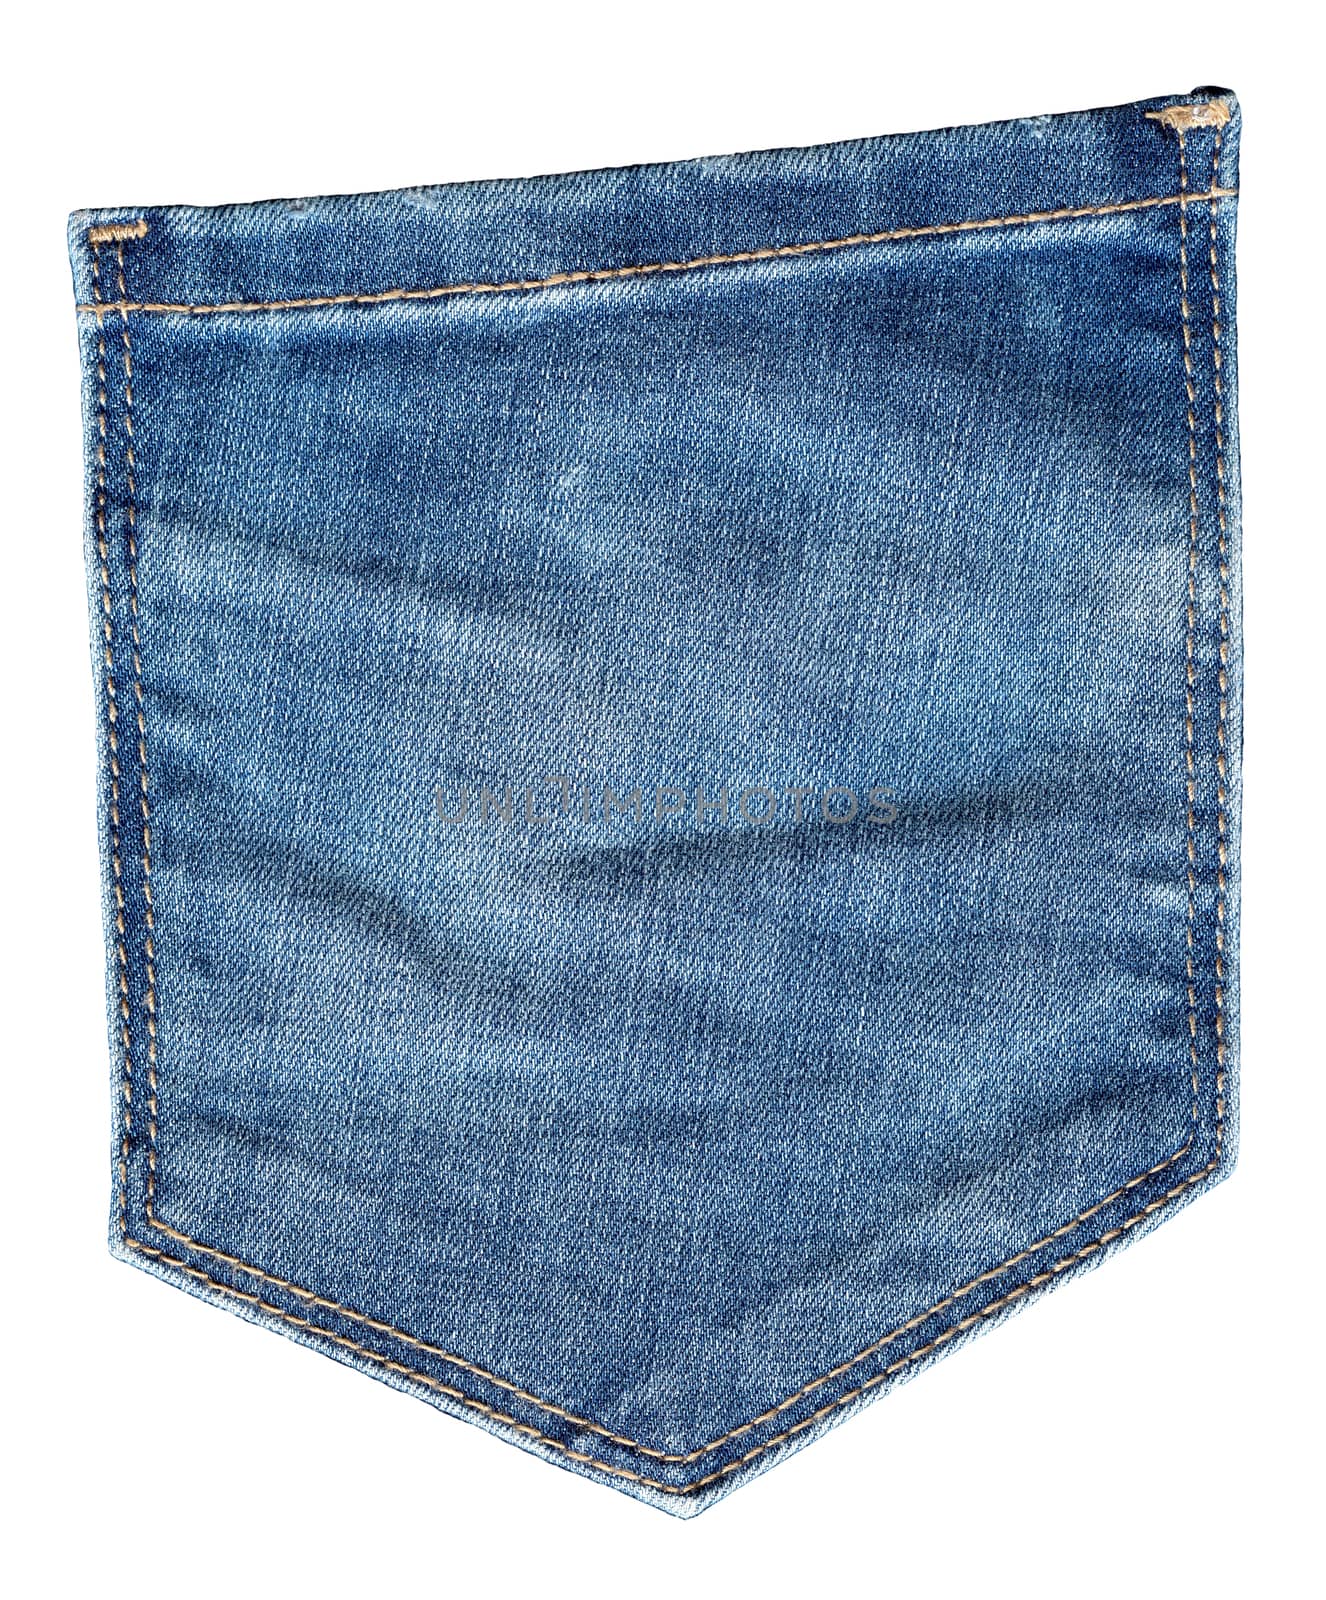 Jeans pocket. Shabby blue denim. by ESSL